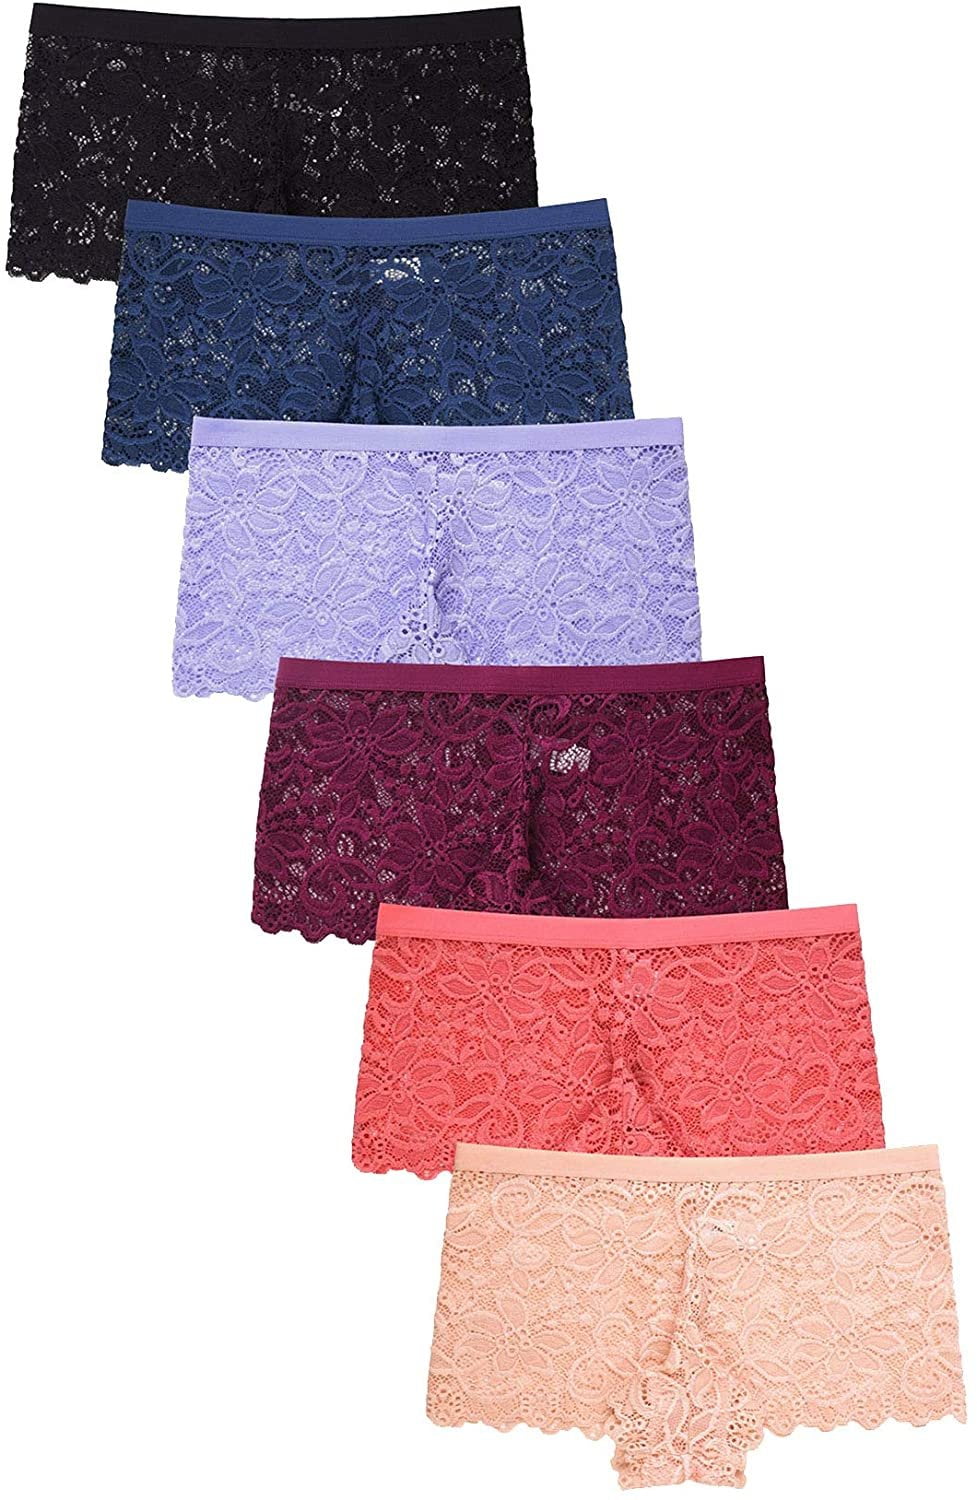 12 pieces of Briefs Boxer Women Sexy Lace Boyshort Panty S-3XL Regular +  Plus Size